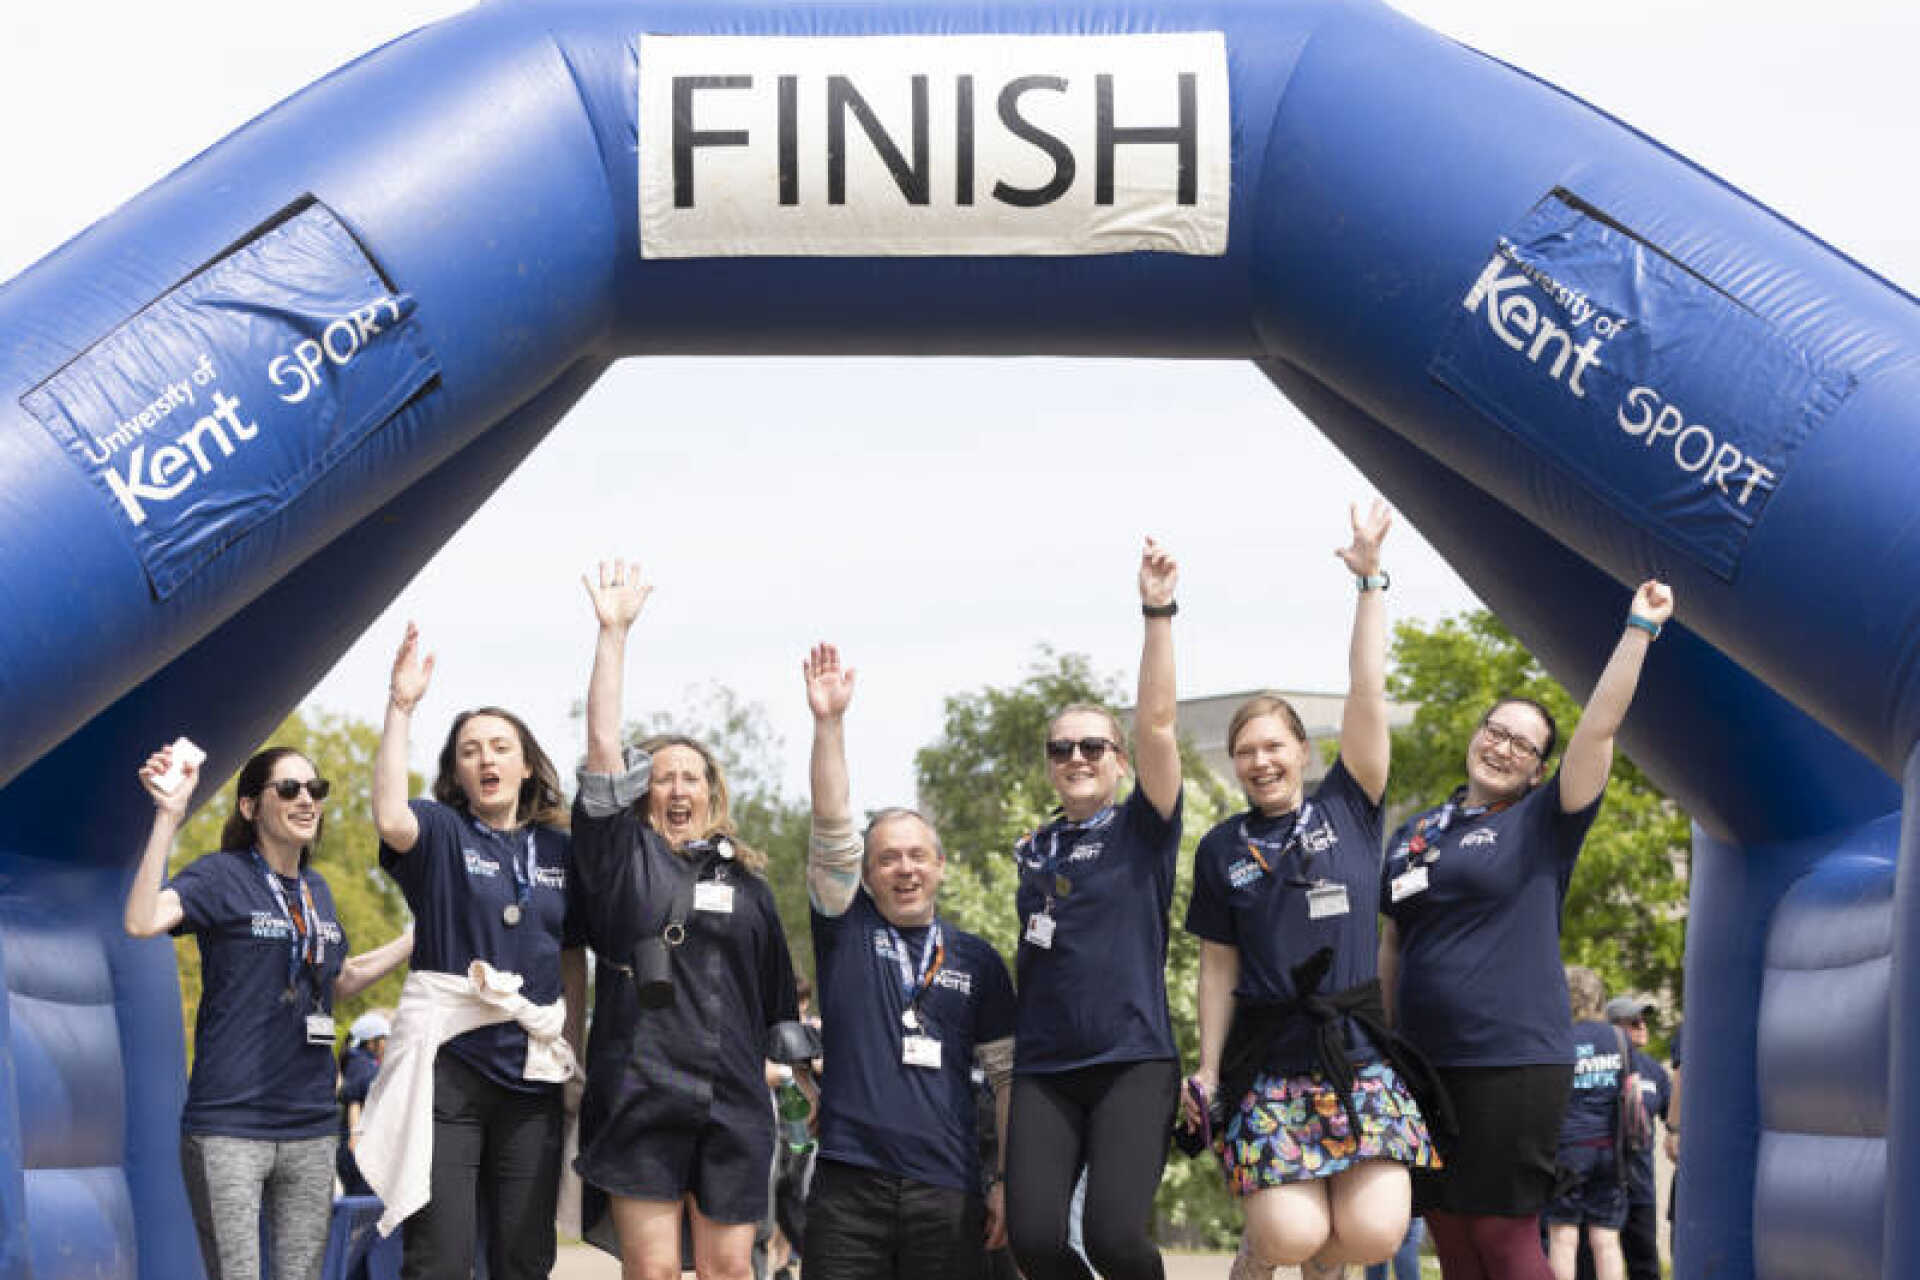 Kent Giving Week Volunteers at '5k your Way' finish line